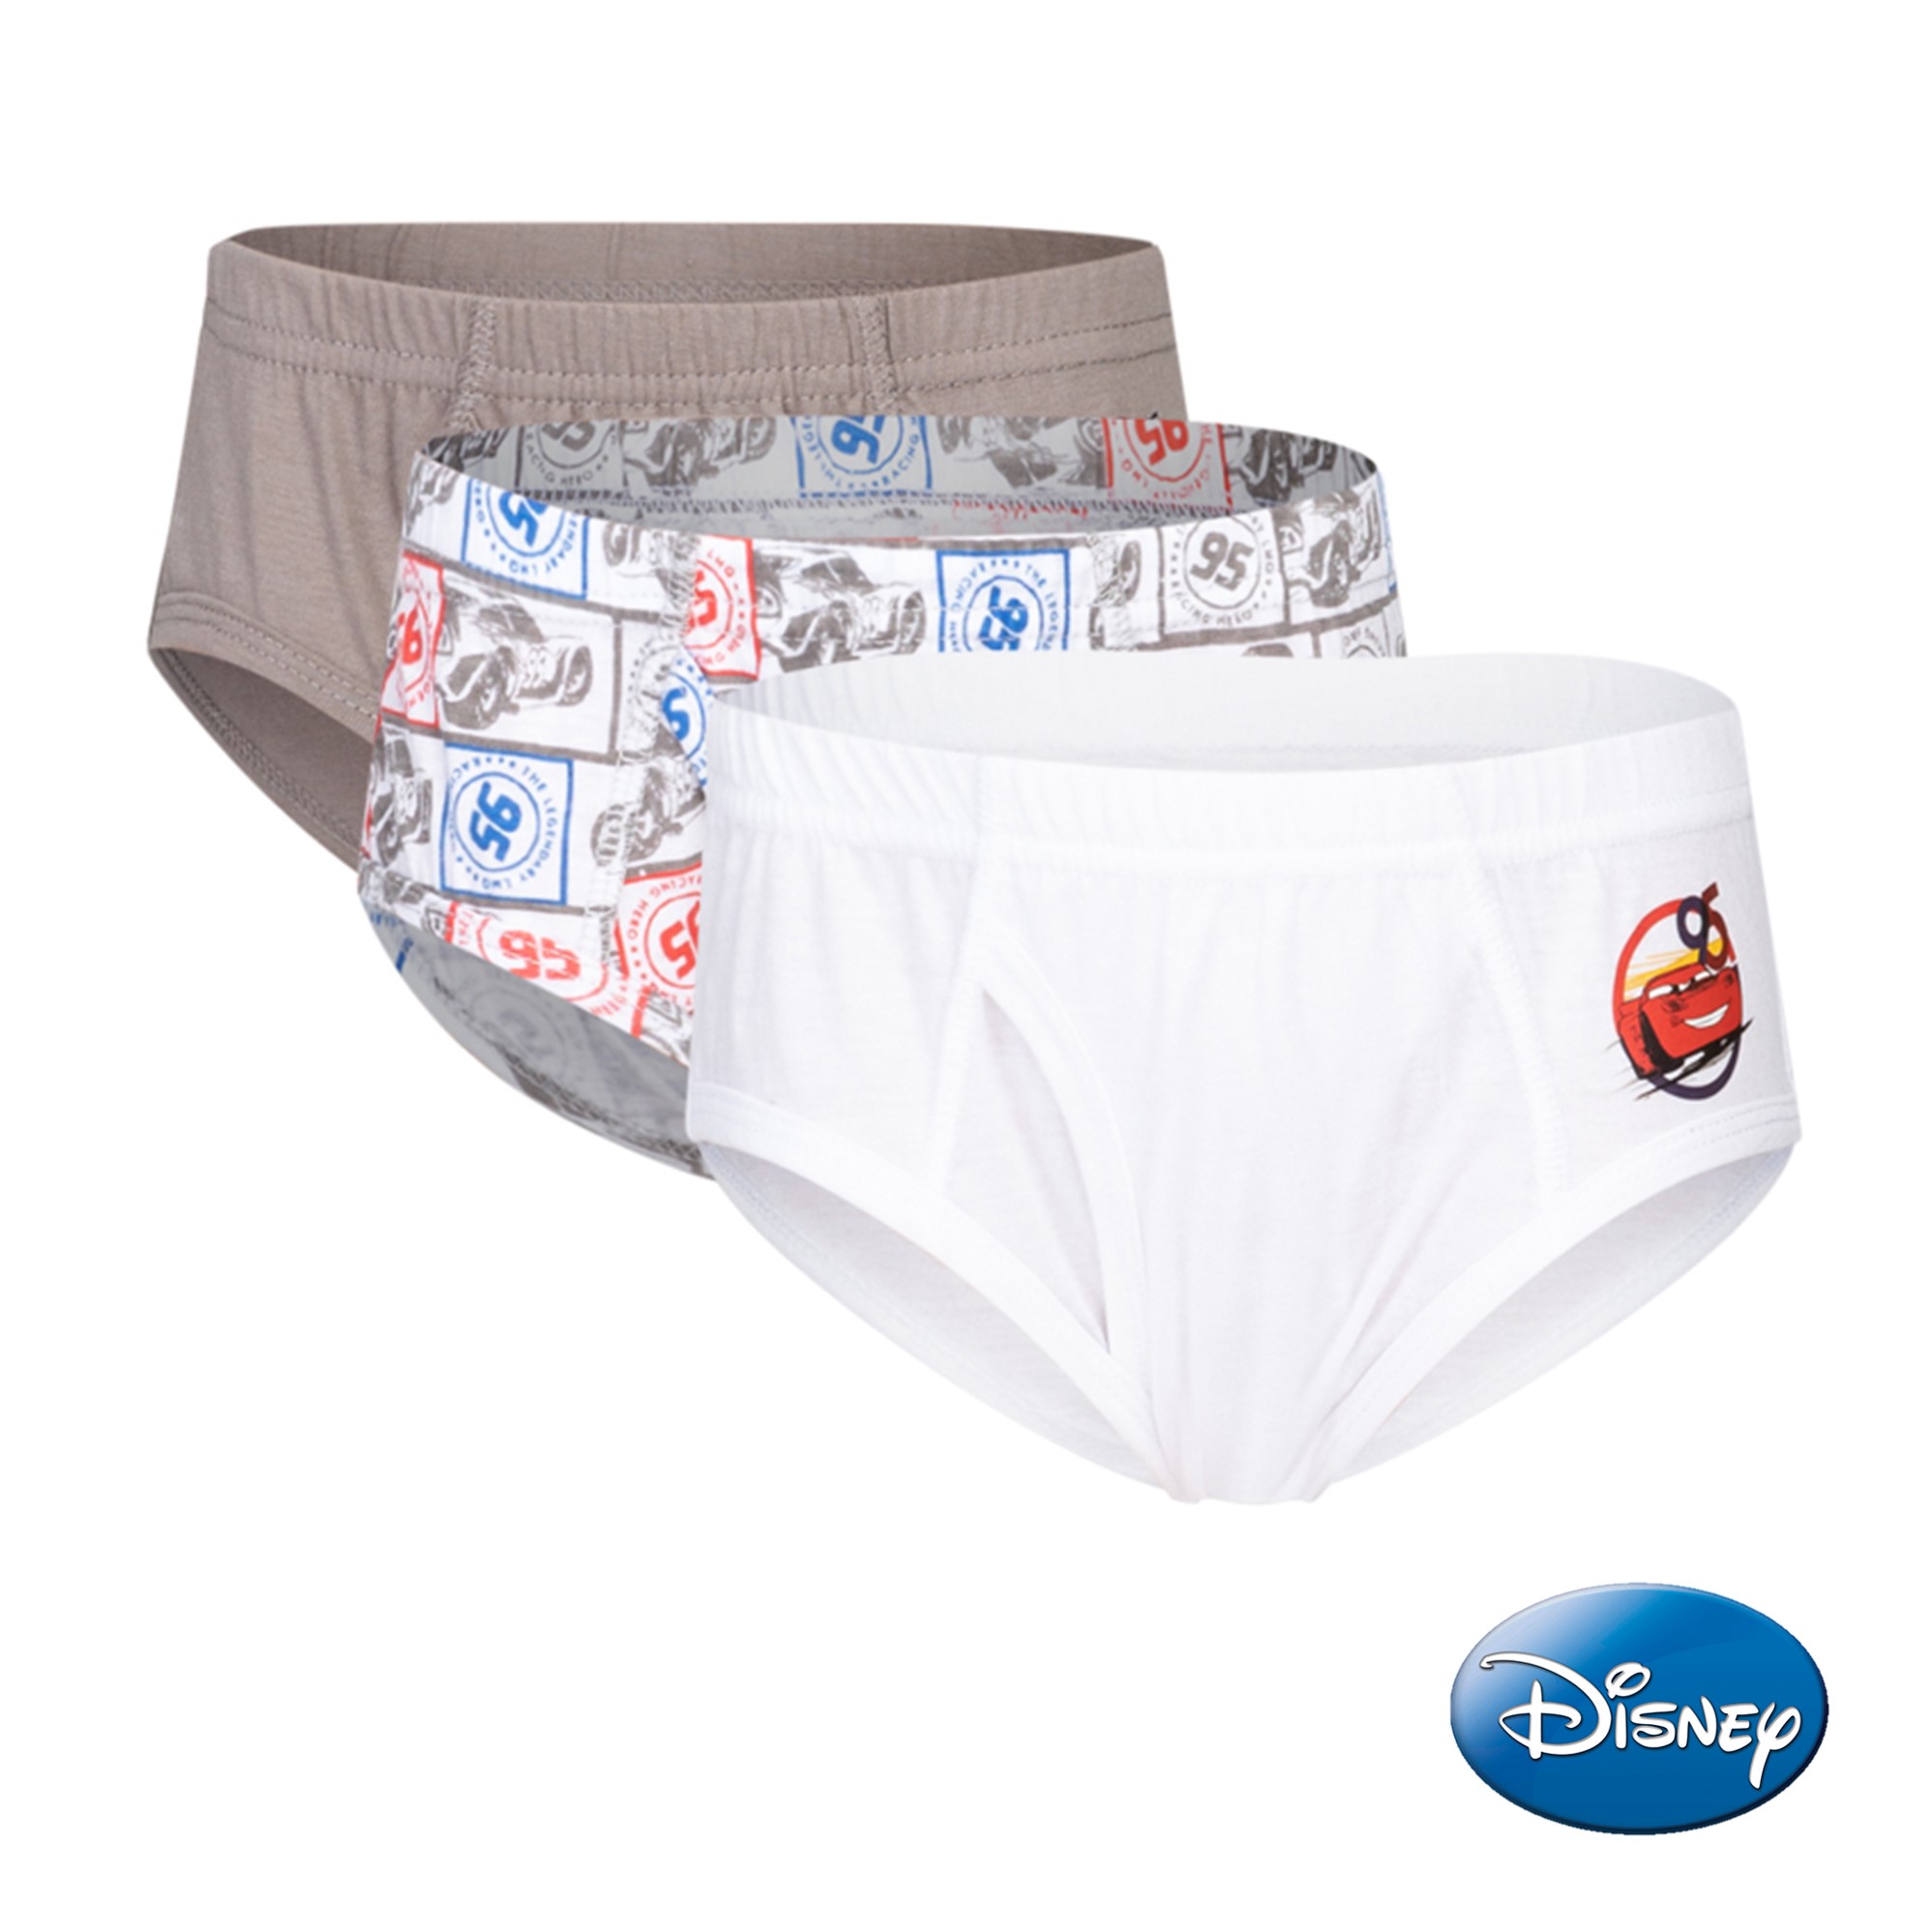 Underpants Boy Cars Disney, Disney Cars Underwear